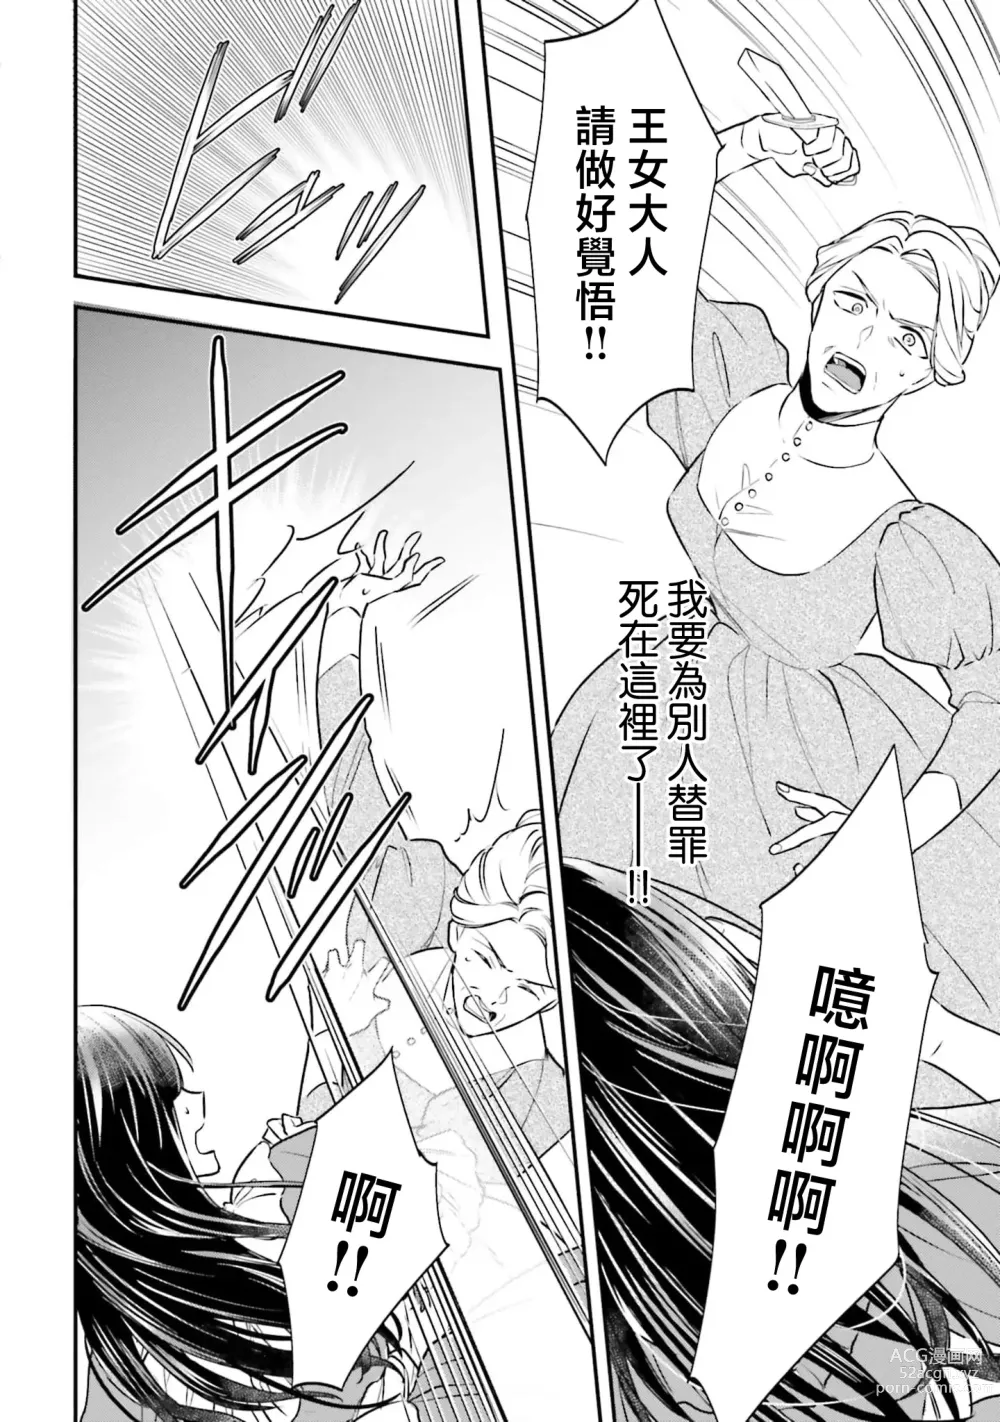 Page 24 of manga 在异世界成为了替身公主被霸王掳走了 1-6